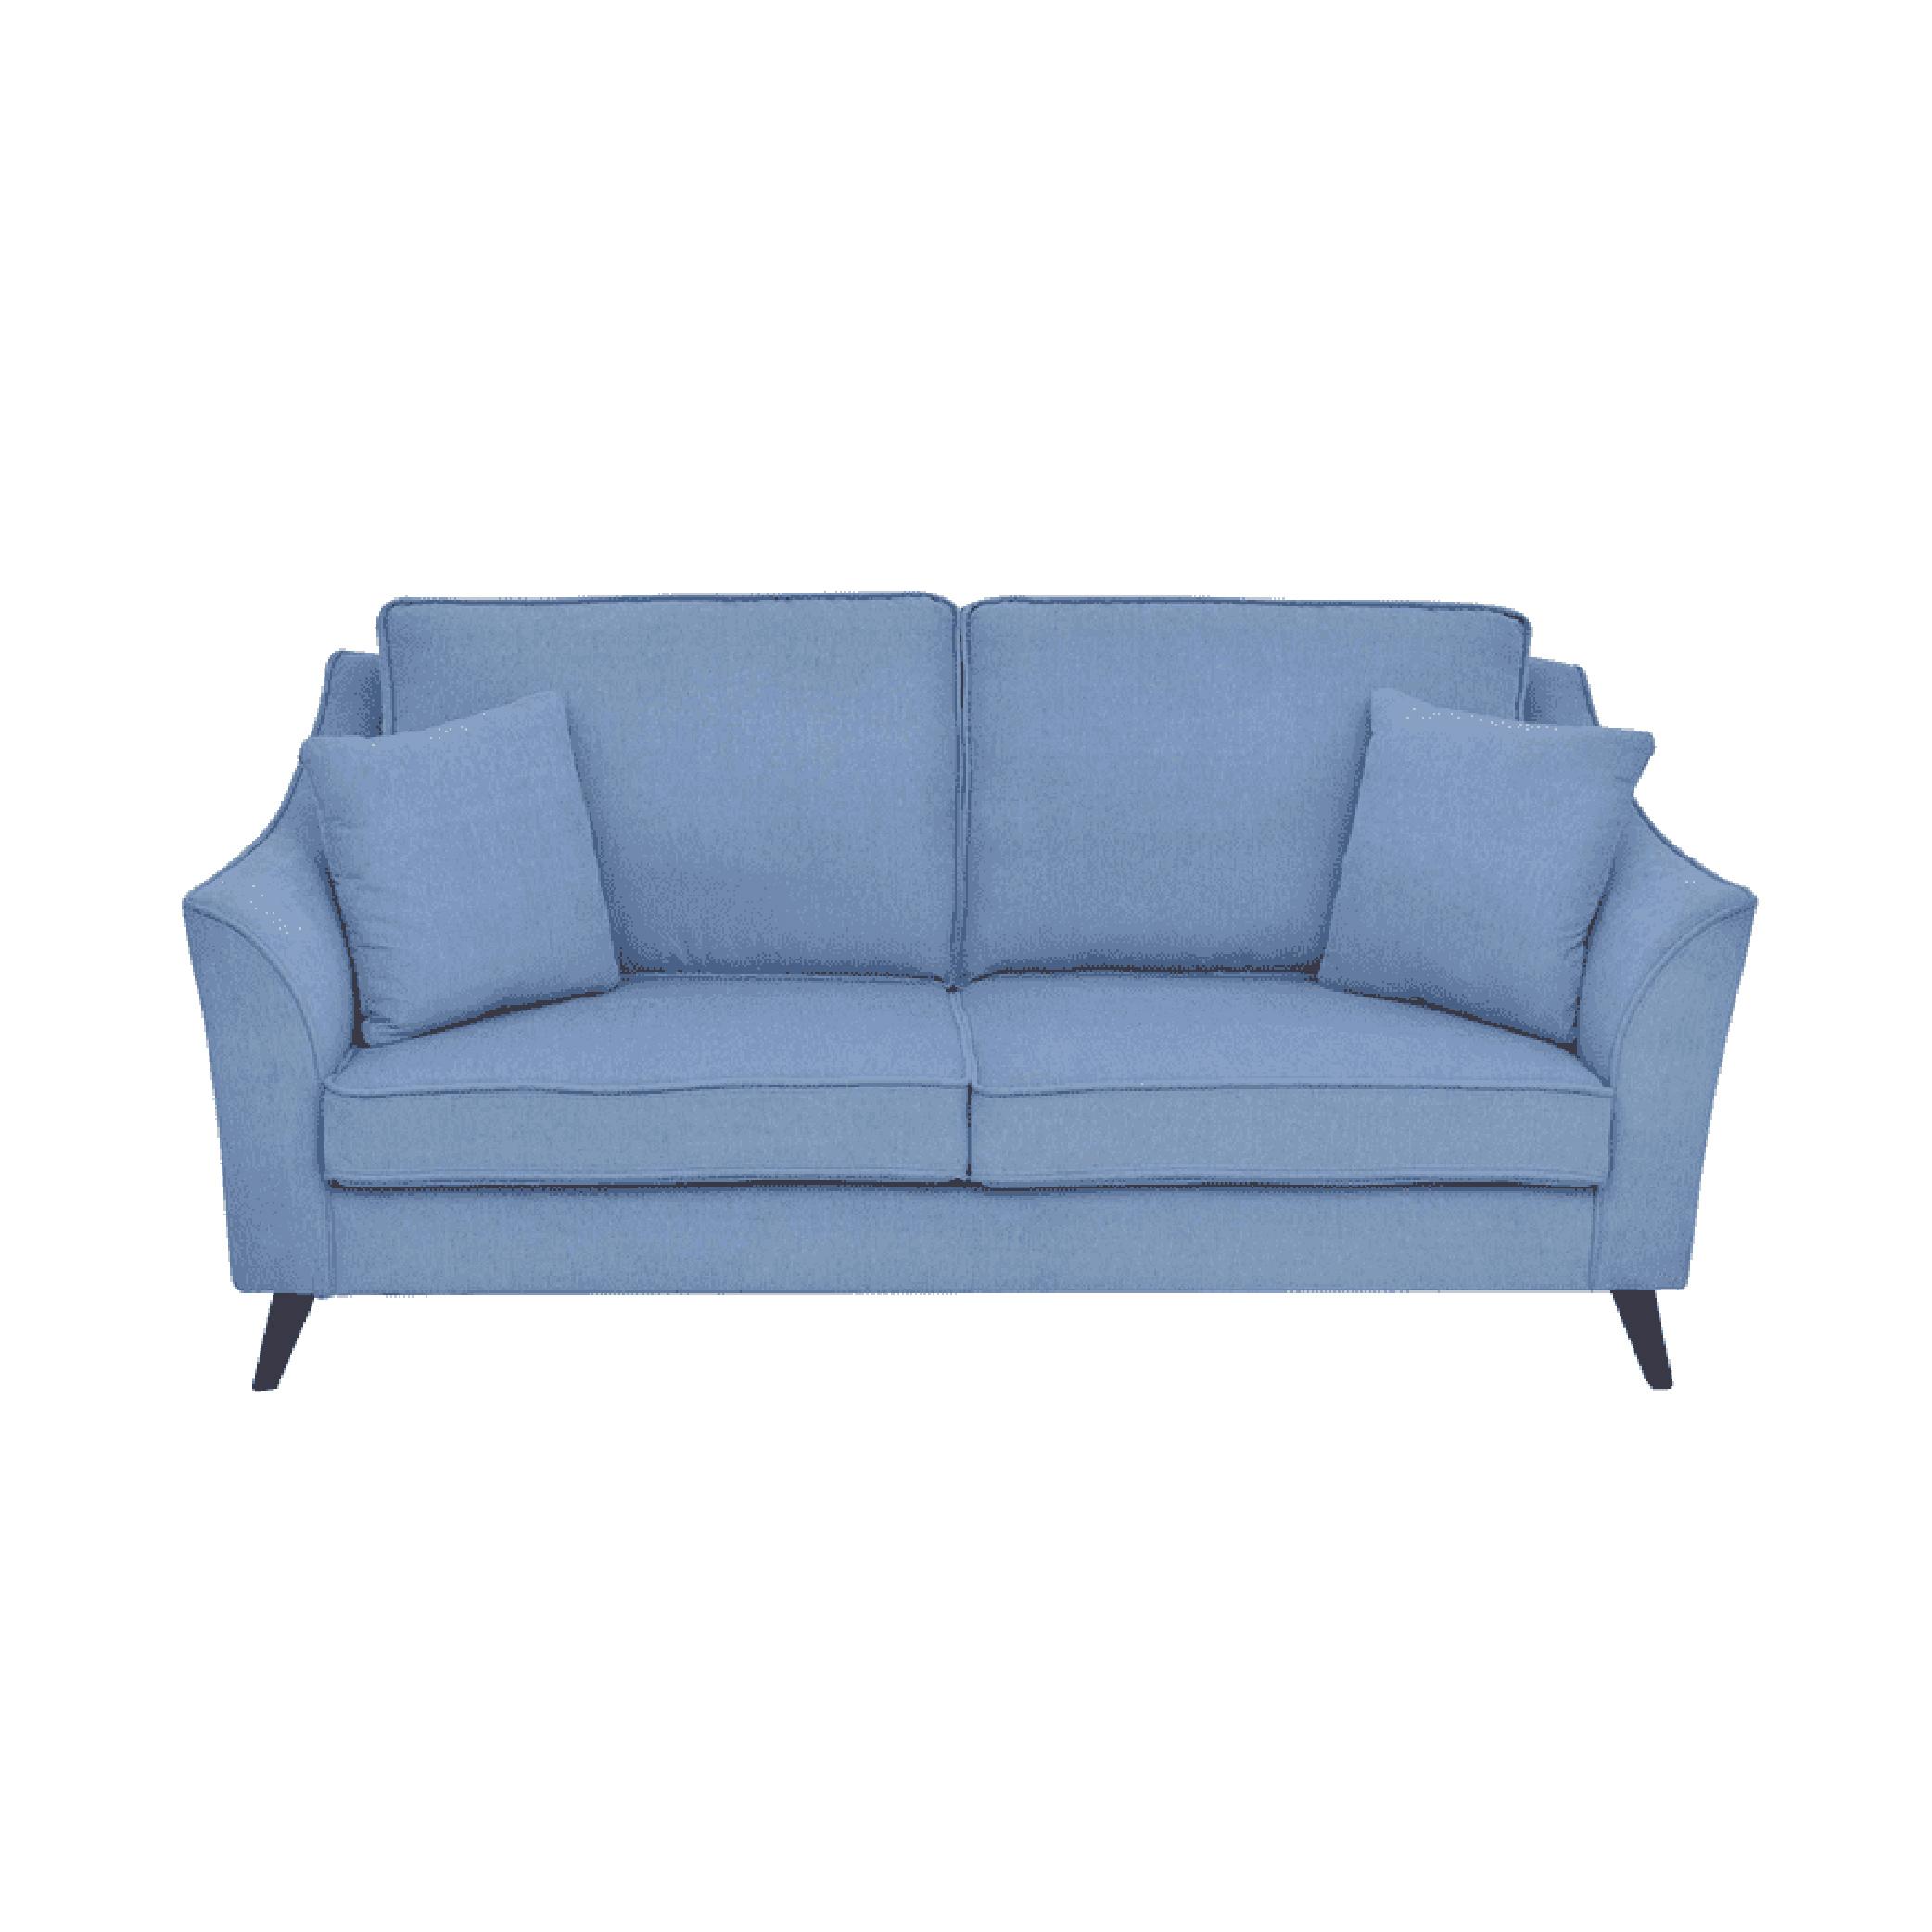 Sessa Three Seater Sofa in Ice Blue Colour